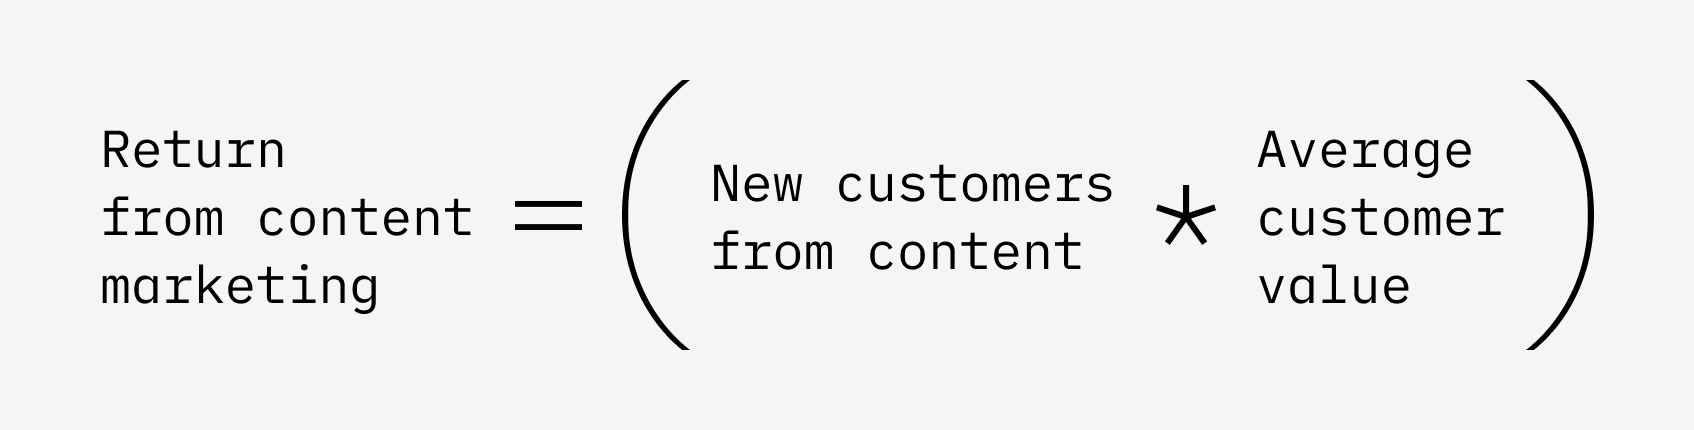 Rendite aus Content-Marketing = (Neukunden aus Content * ACV)